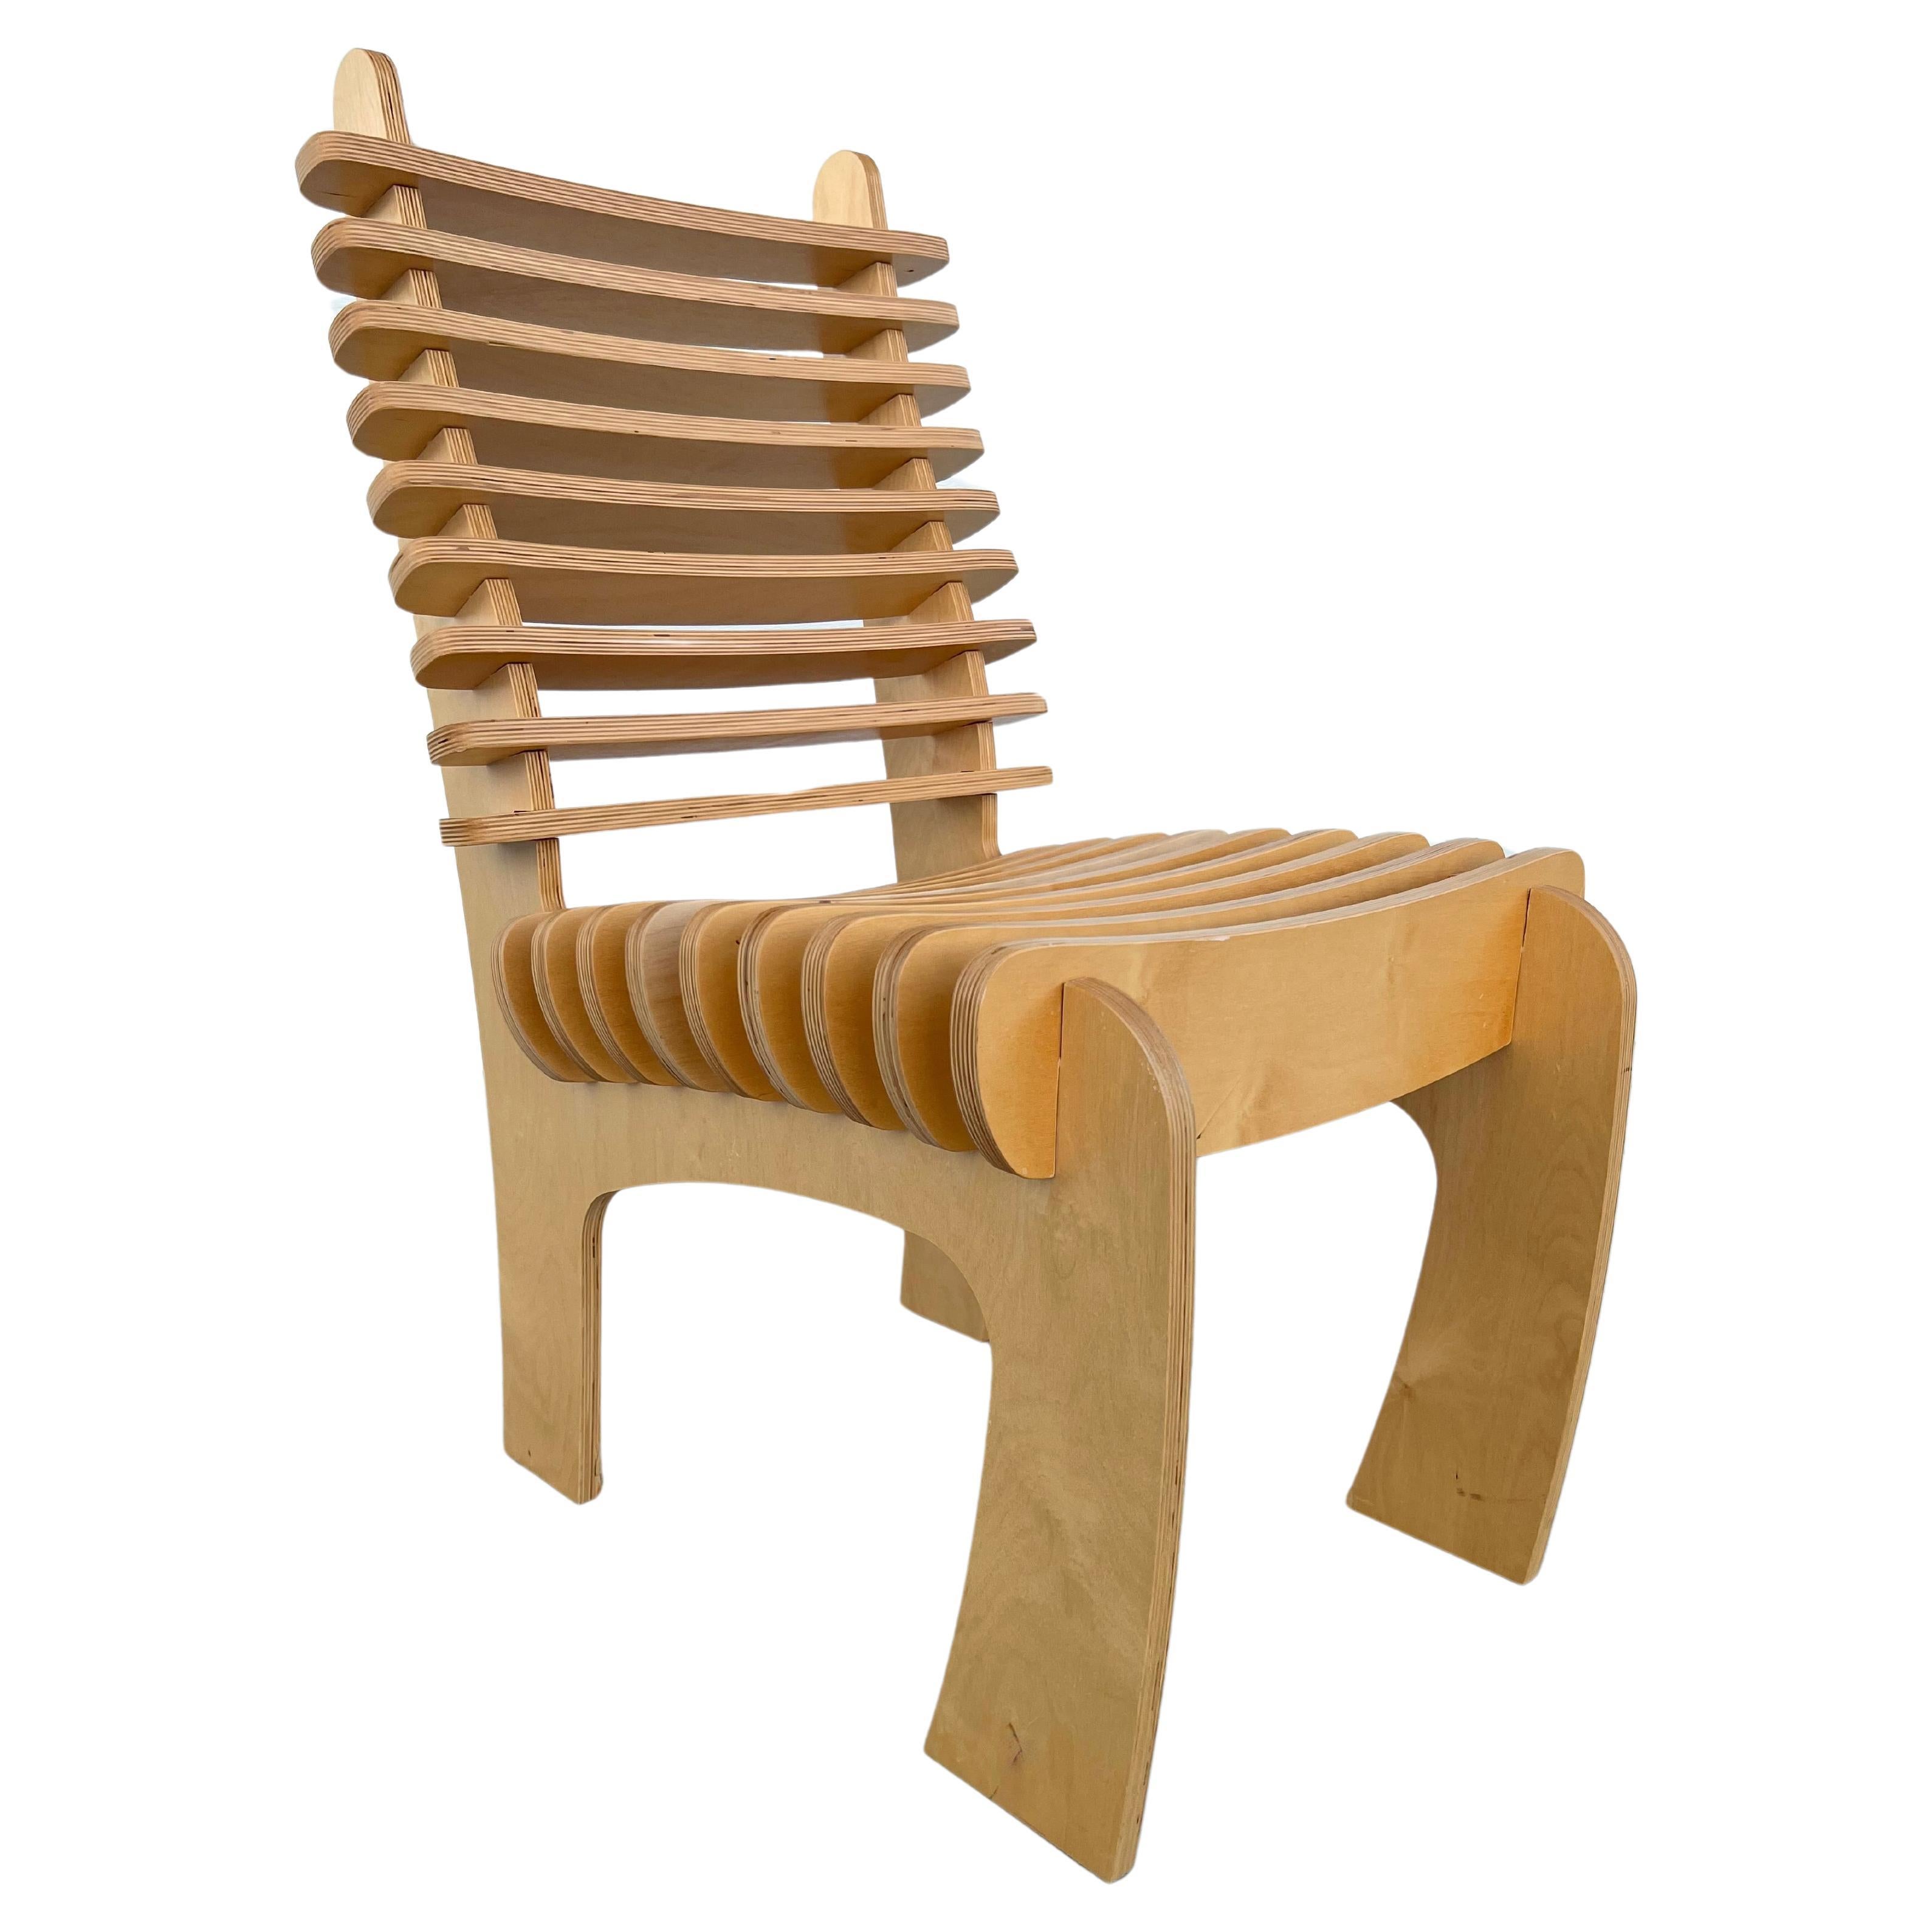 Modern Blond Plywood Minimalist Slat Side Chair Art Architectural Piece